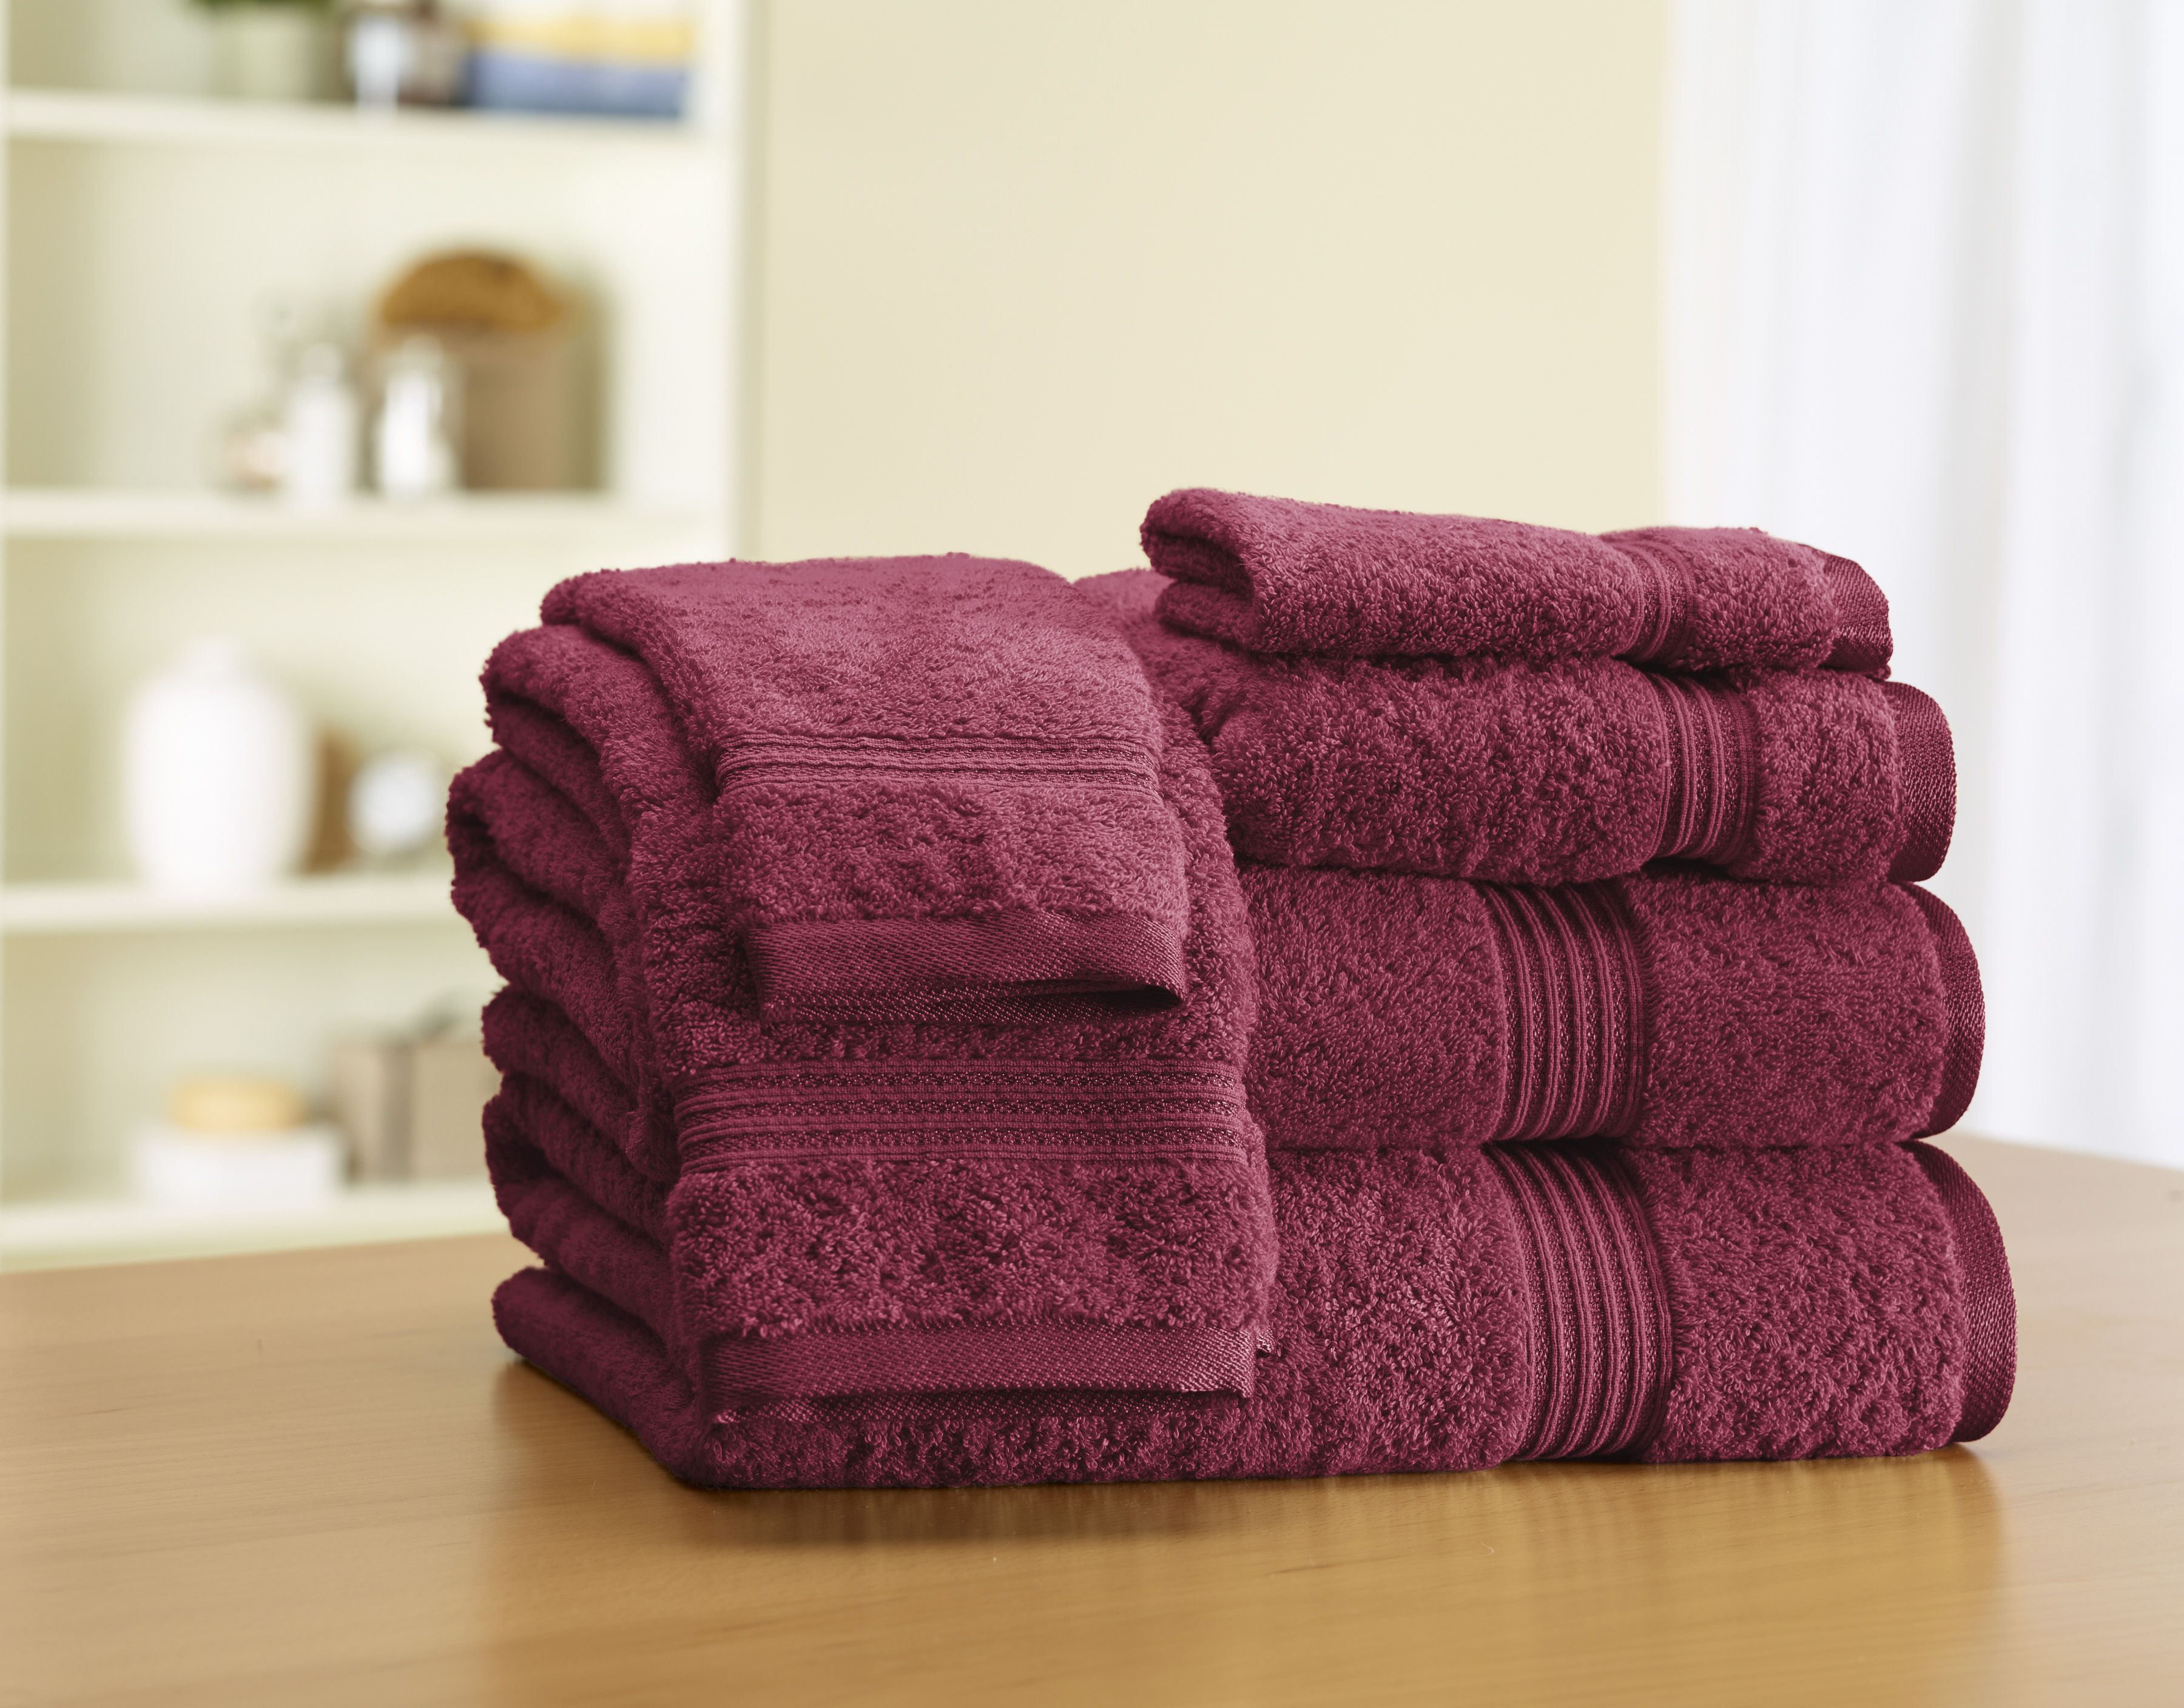 Fingerhut - Superior 100% Premium Long-Staple Combed Cotton 600 GSM 4-Pc. Bath  Towel Set